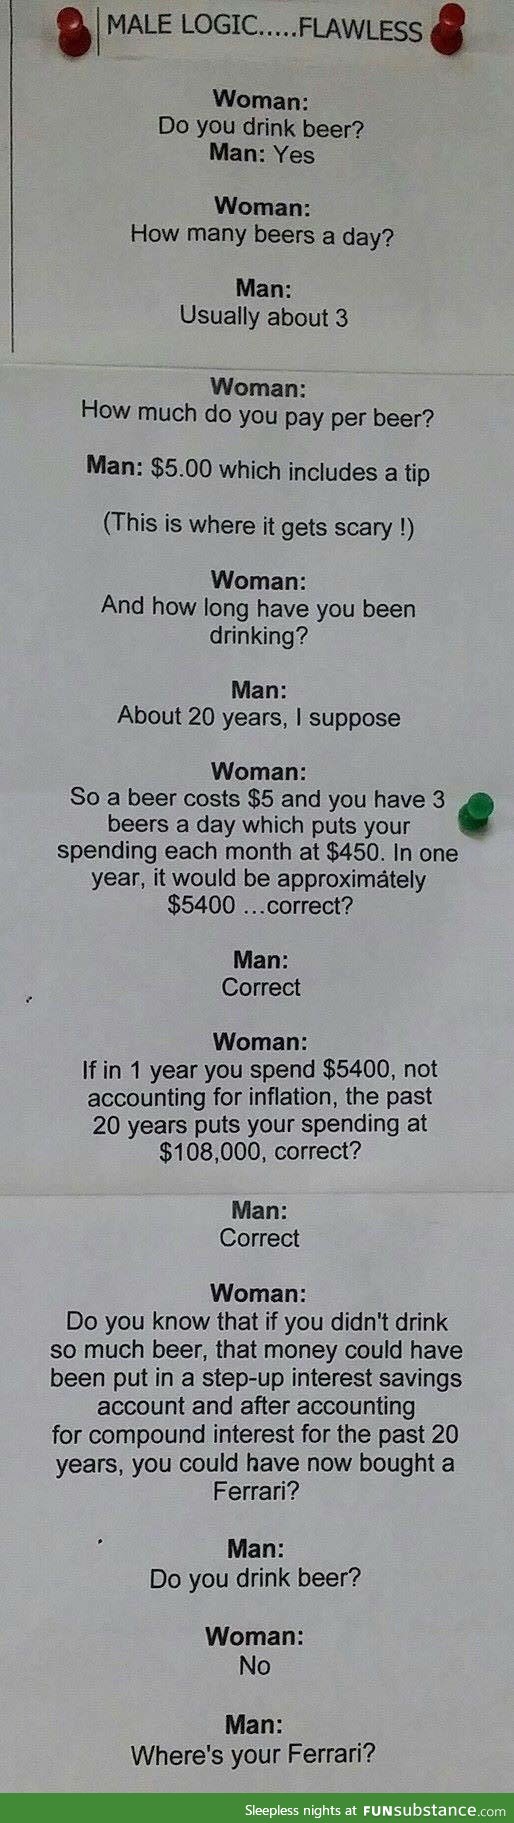 Male logic